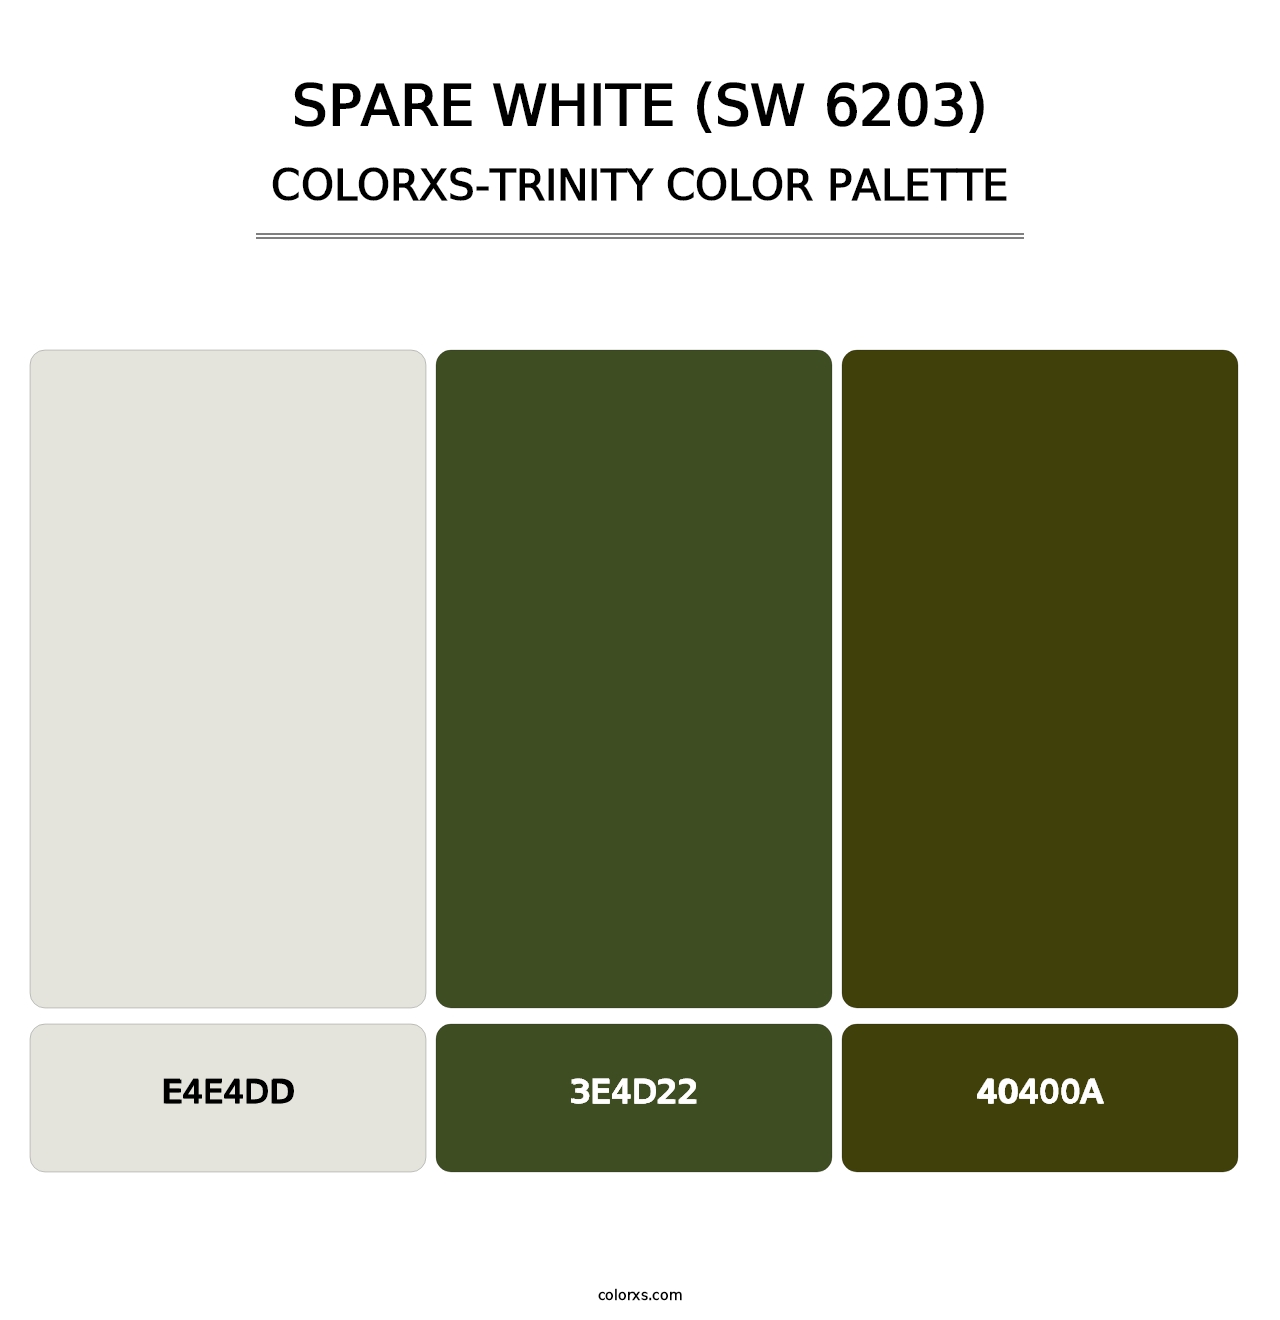 Spare White (SW 6203) - Colorxs Trinity Palette